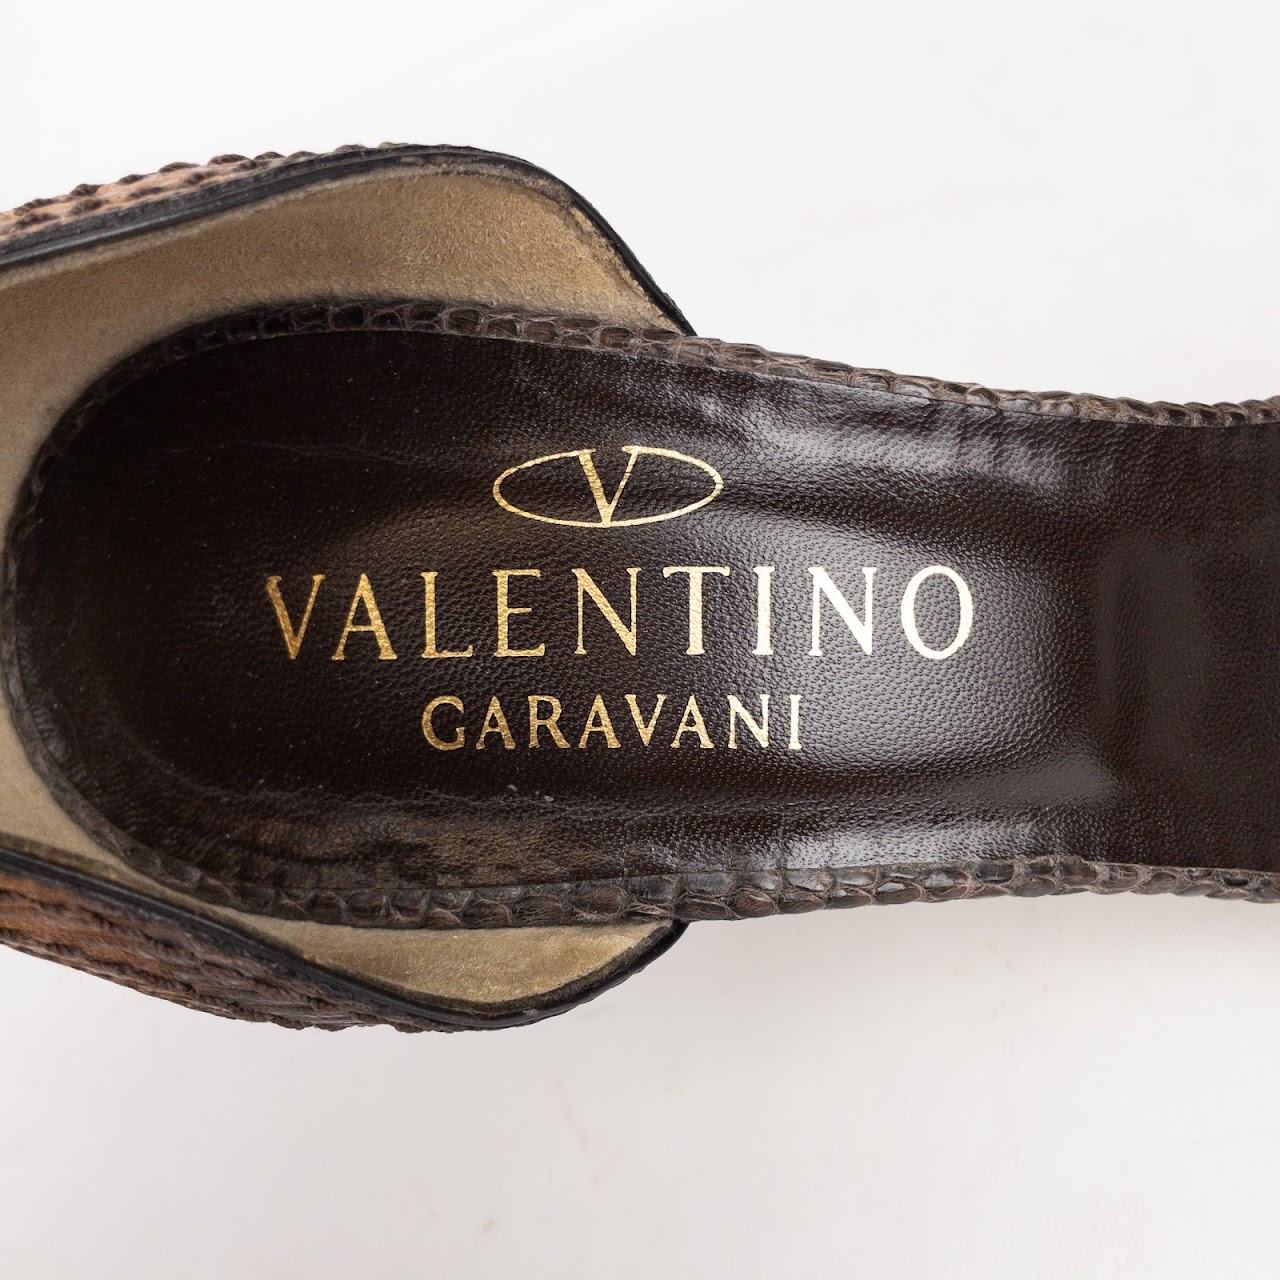 Valentino Garavani D'Orsay Open Toe Pumps